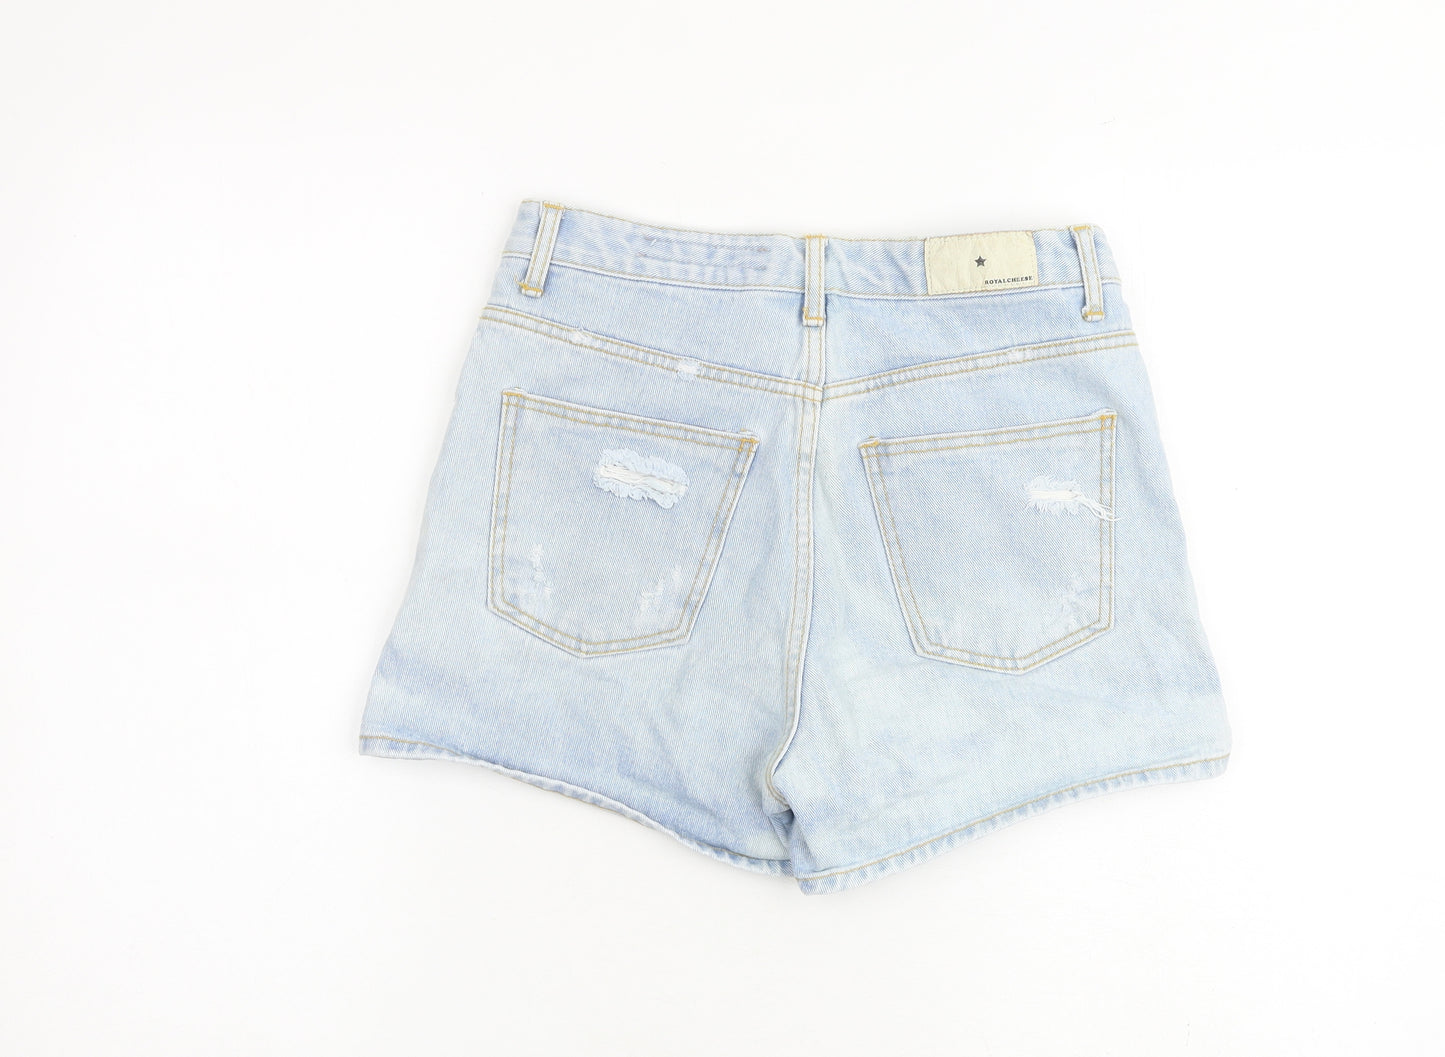 Royalcheese Womens Blue 100% Cotton Mom Shorts Size M L3 in Regular Zip - Distressed Denim